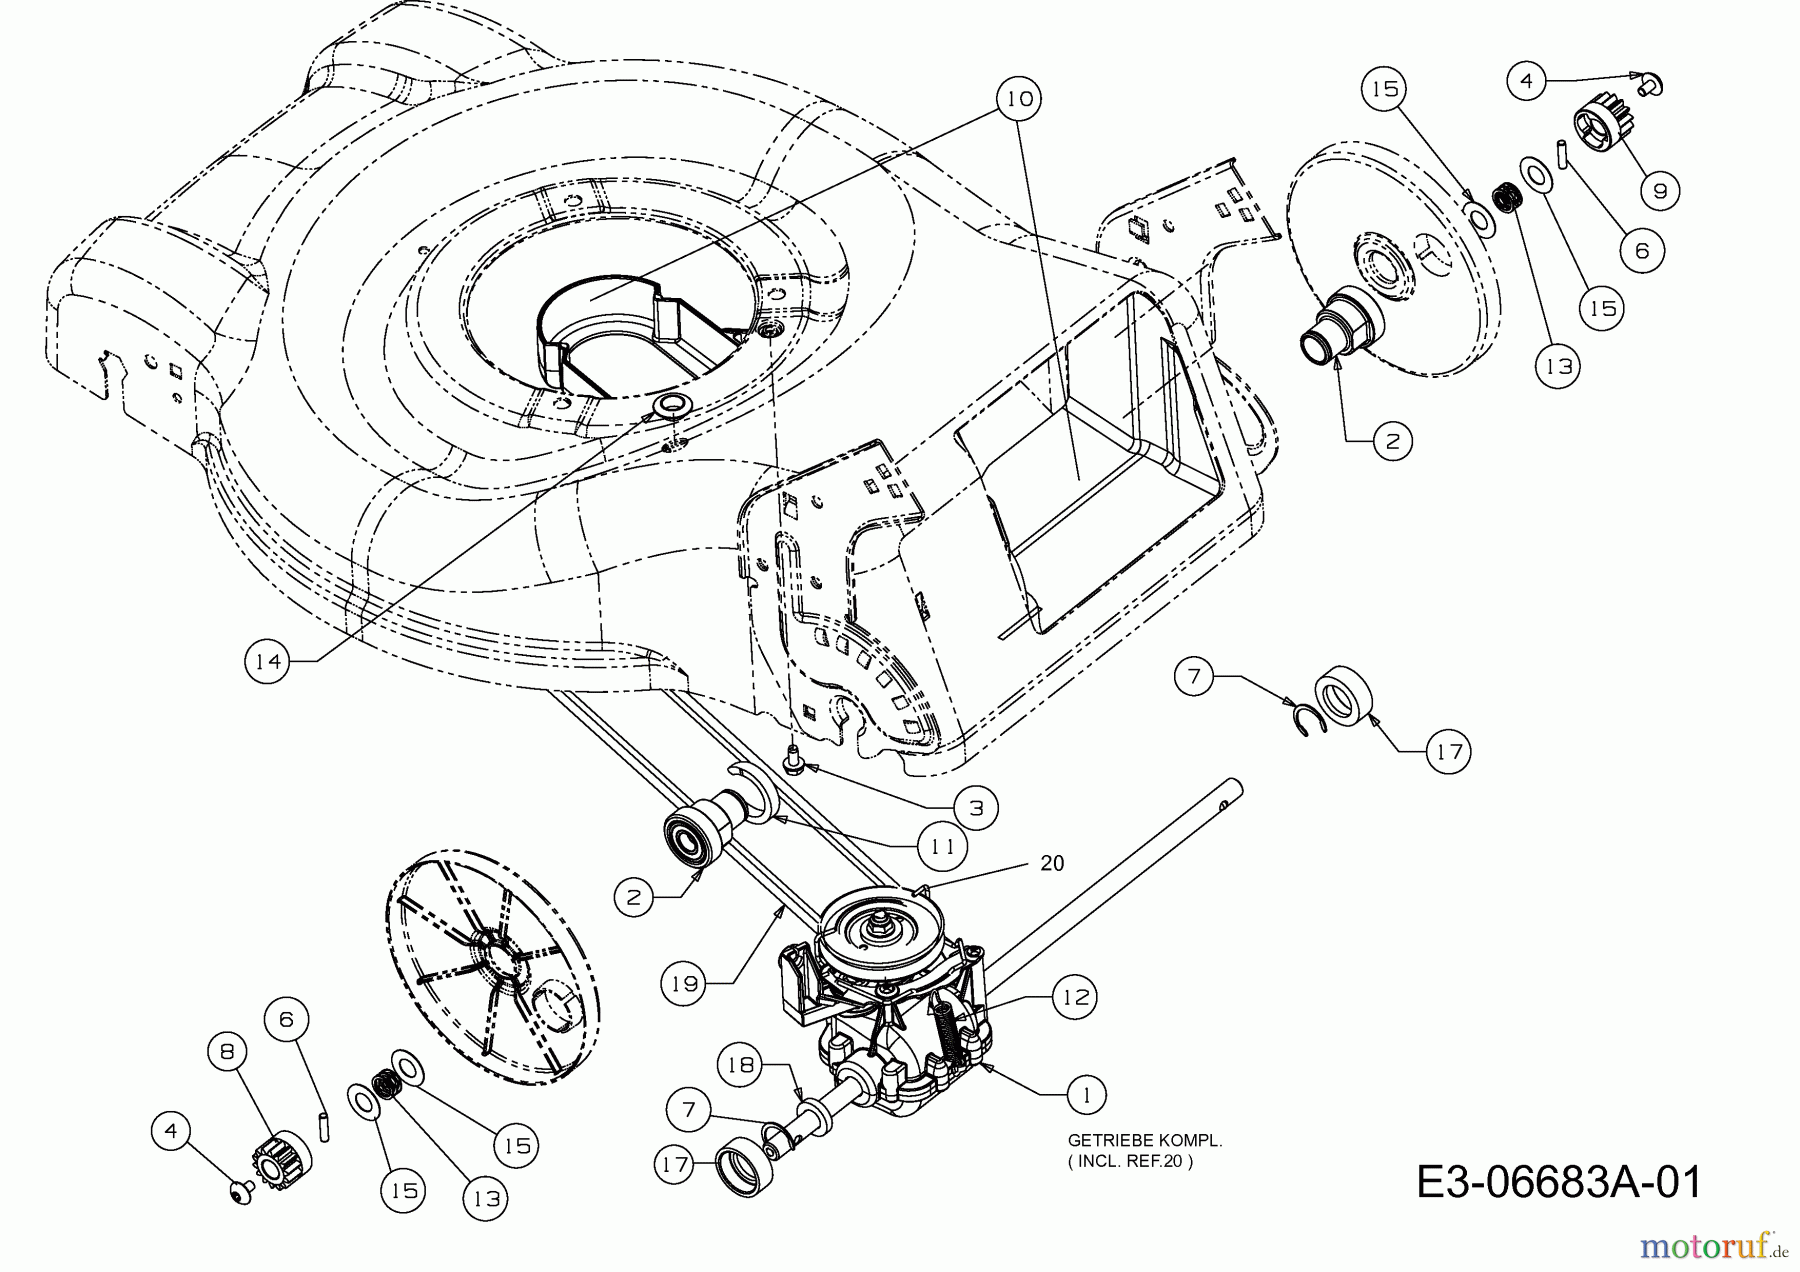  Sterwins Motormäher mit Antrieb 420 BTC 12A-I44M638  (2013) Getriebe